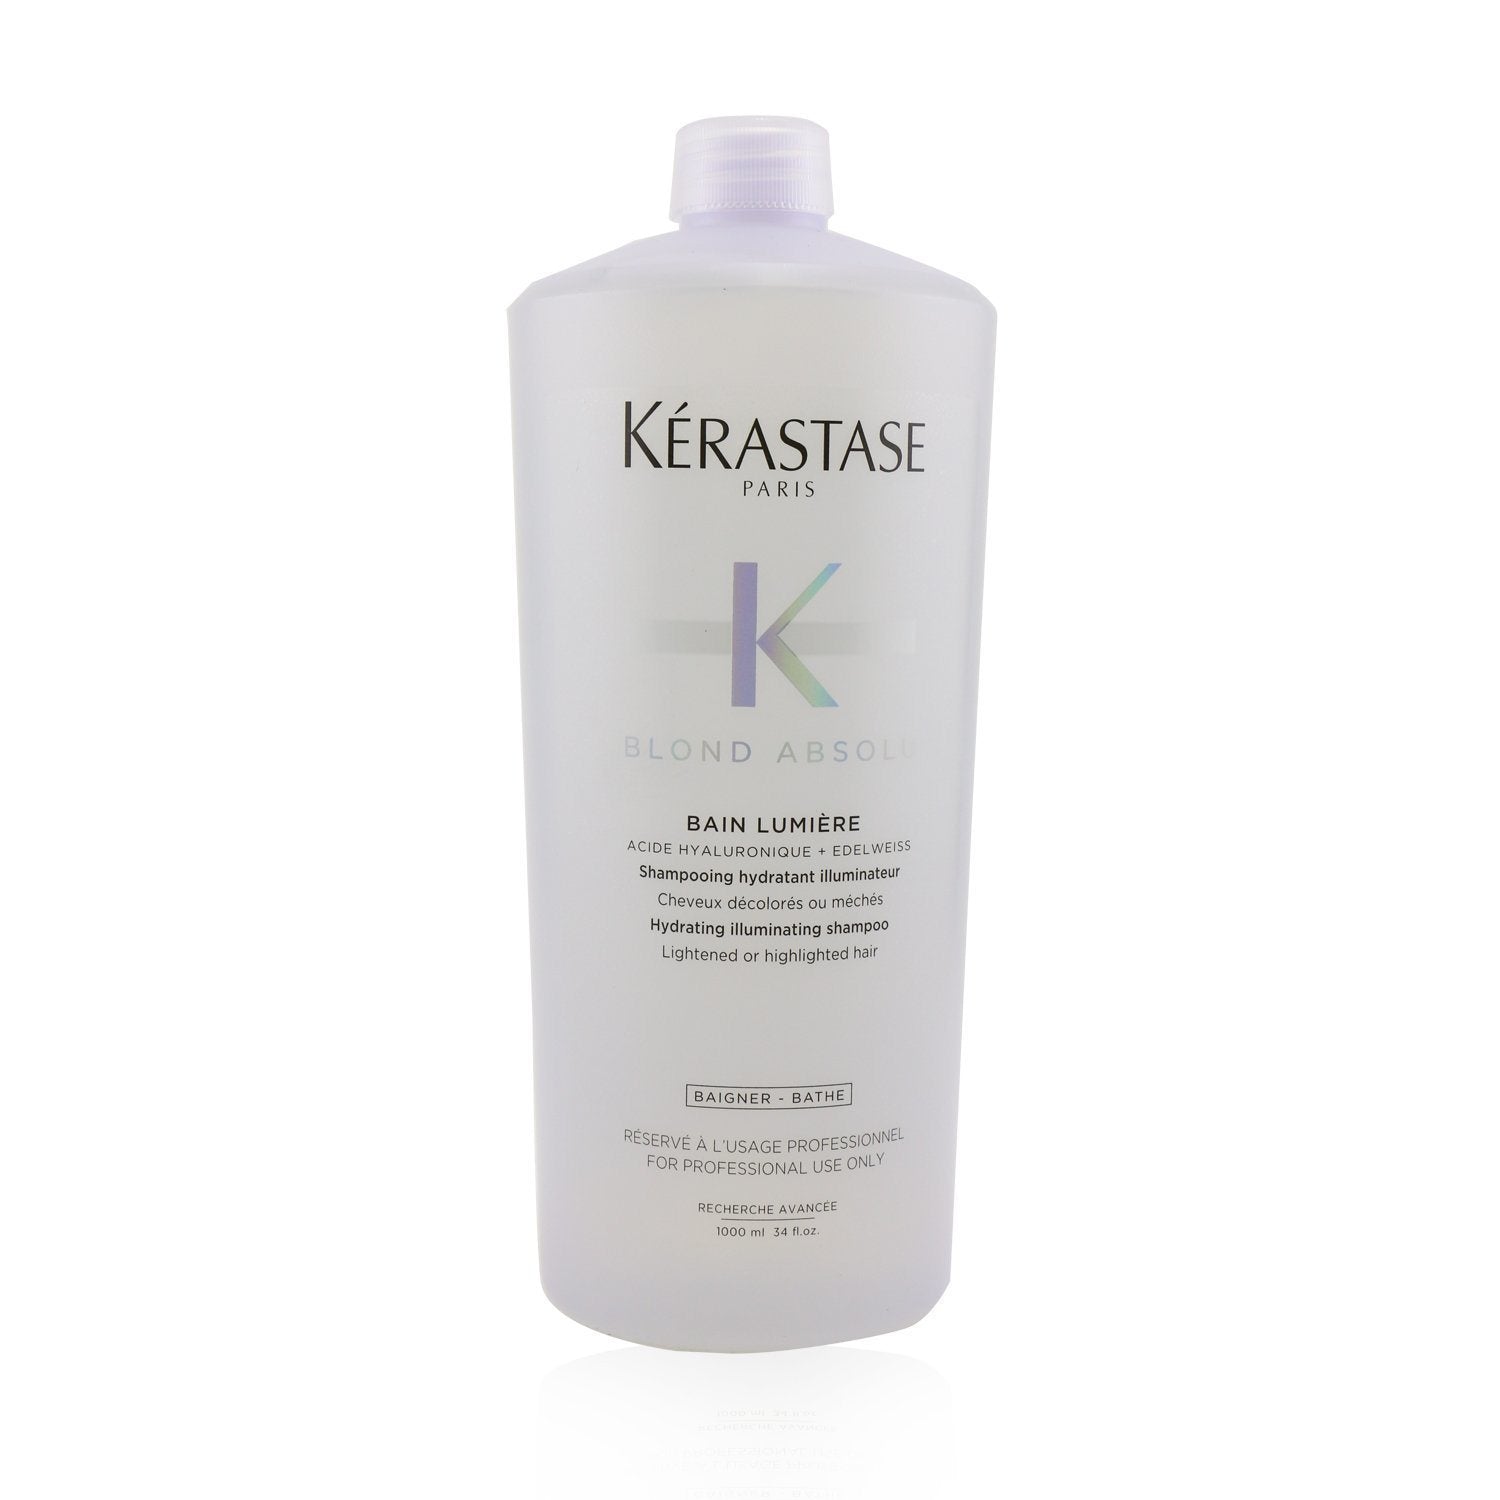 KERASTASE-Blond Absolu Bain Lumiere Hydrating Illuminating Shampoo (Lightened or Highlighted Hair) - 1000ml/34oz 3P's Inclusive Beauty